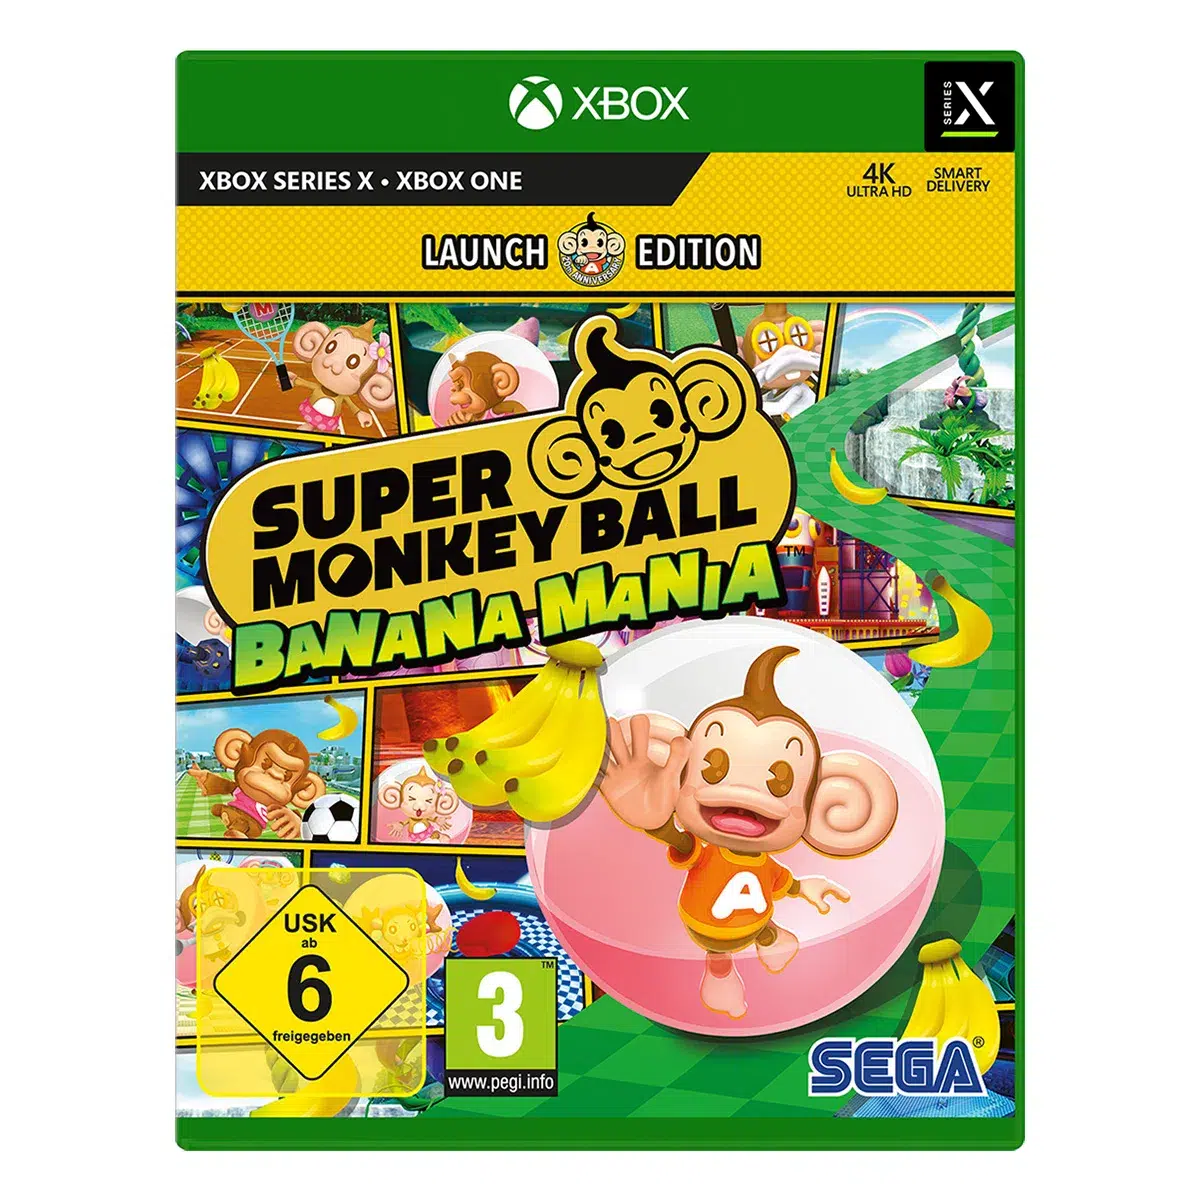 Super Monkey Ball Banana Mania Launch Edition - XSRX